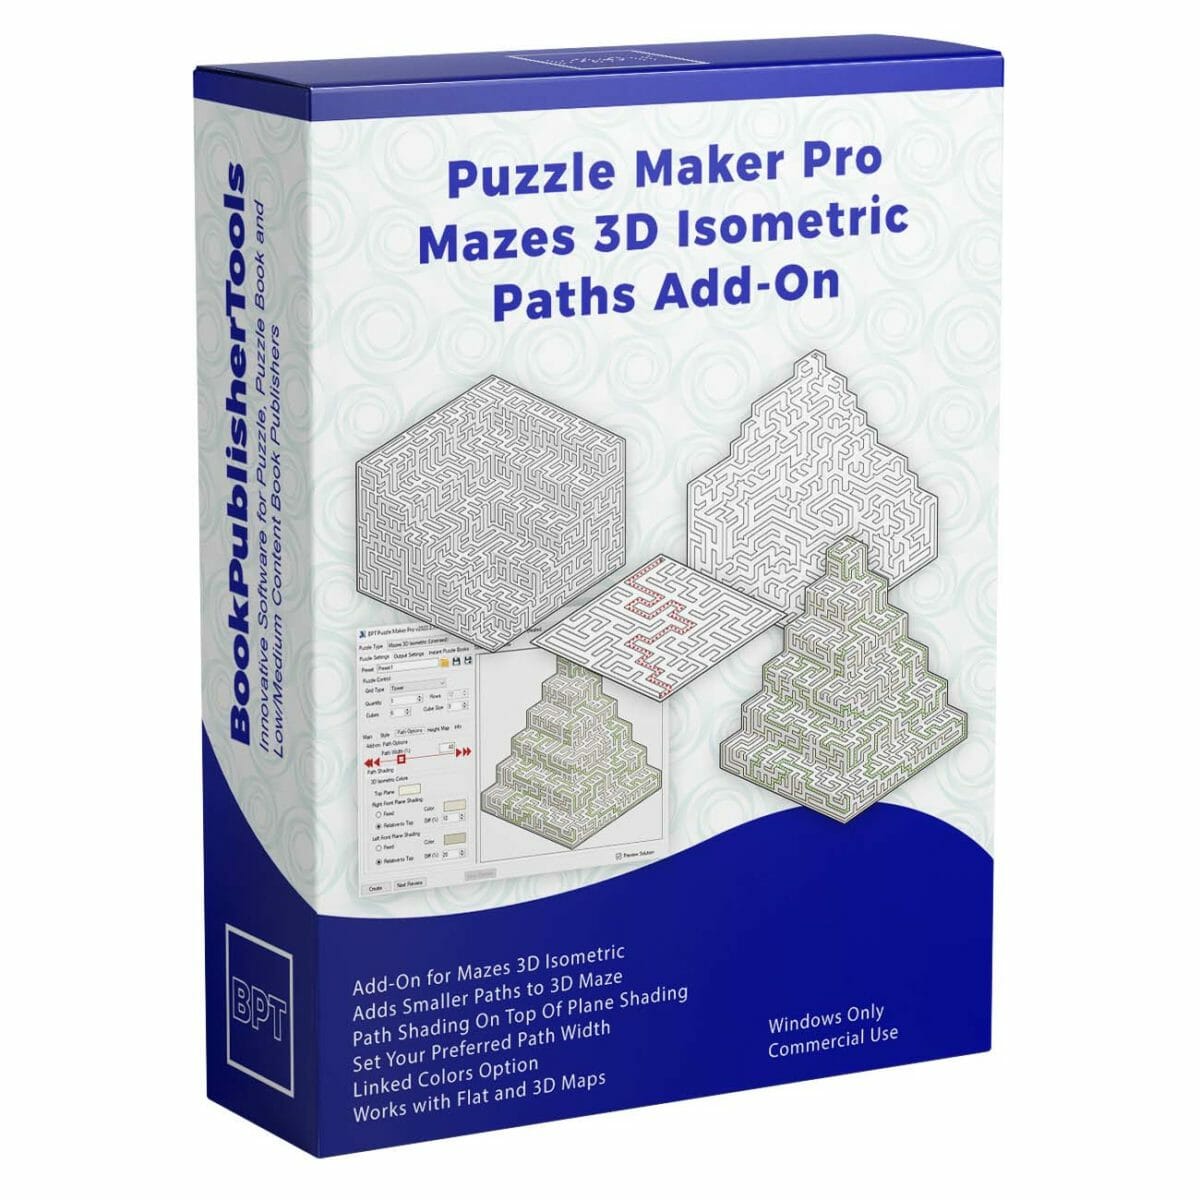 Mazes 3D Isometric Paths Add-On Box